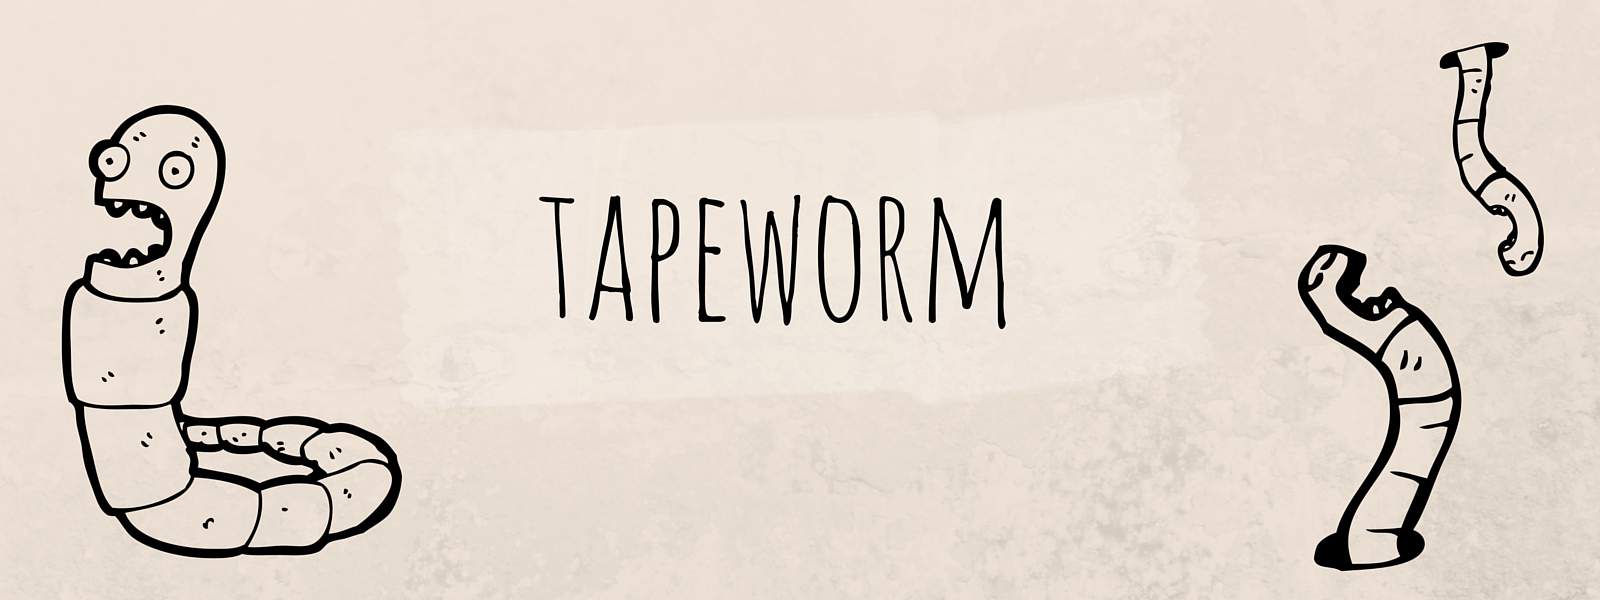 Tape Worm - scariest animal